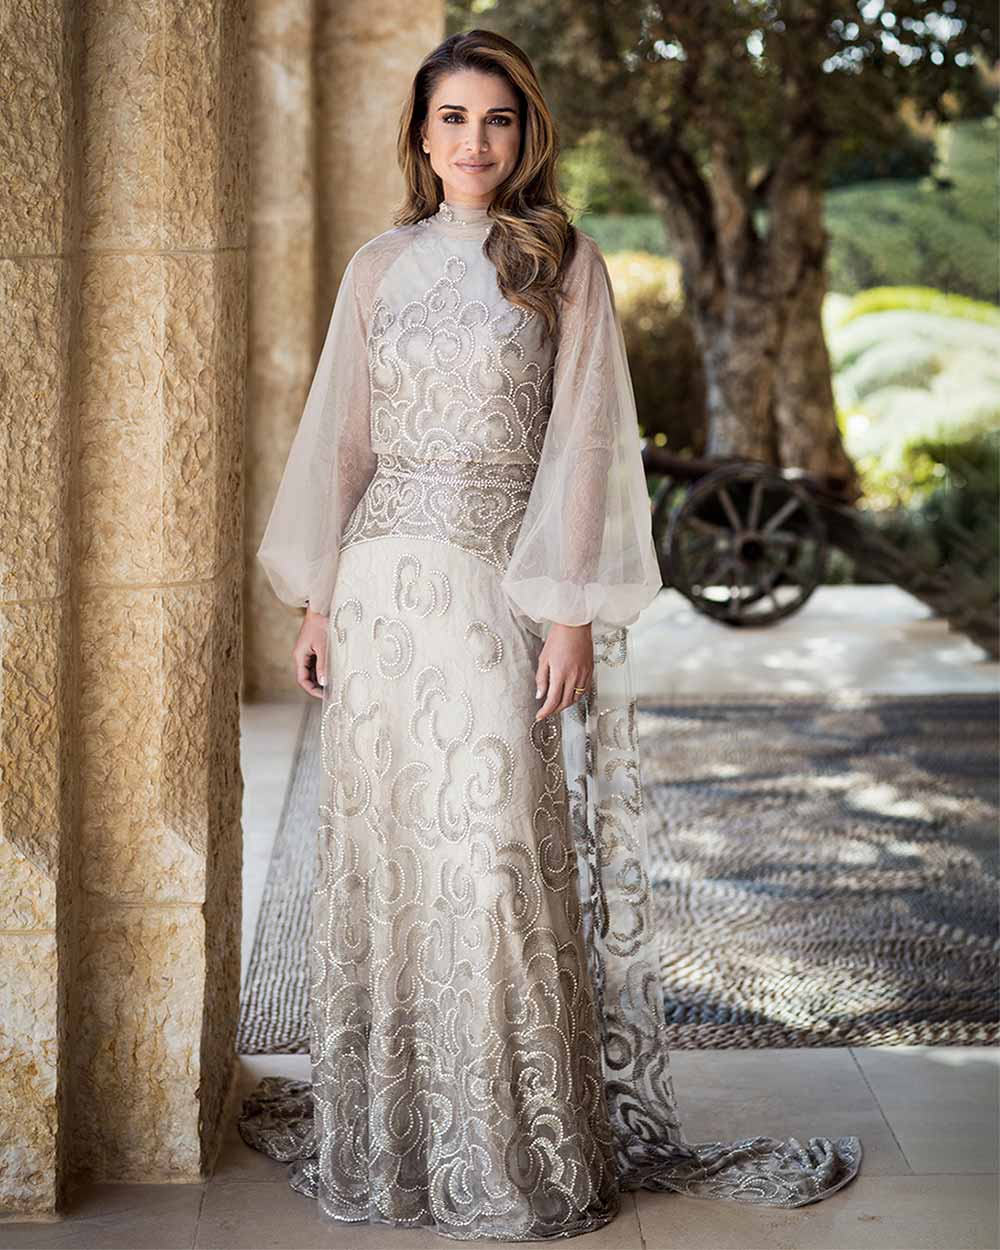 Krikor Jabotian - Queen Rania of Jordan